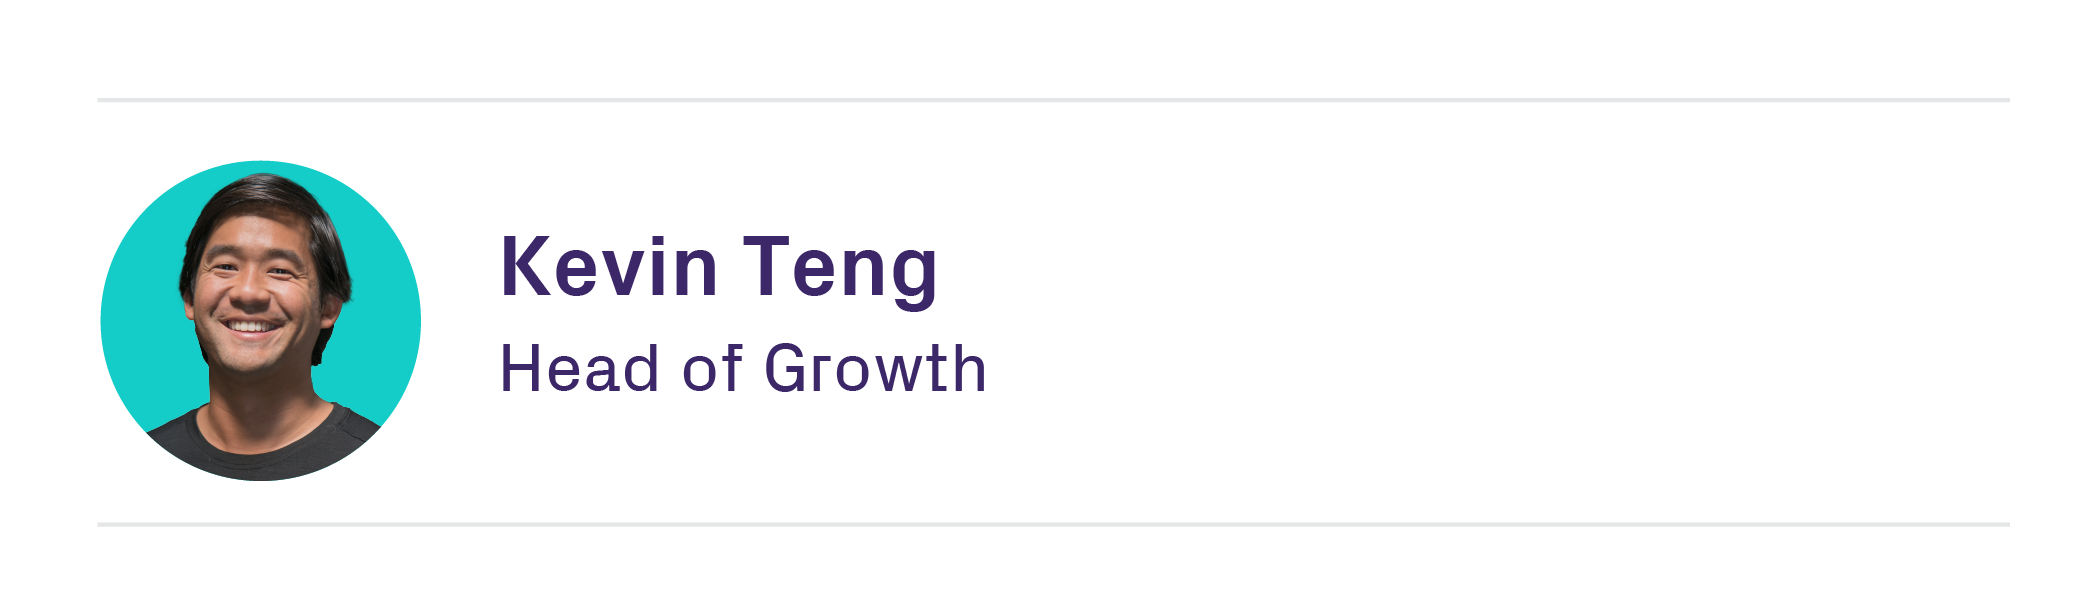 2021 mobile marketing predictions Vungle Kevin Teng